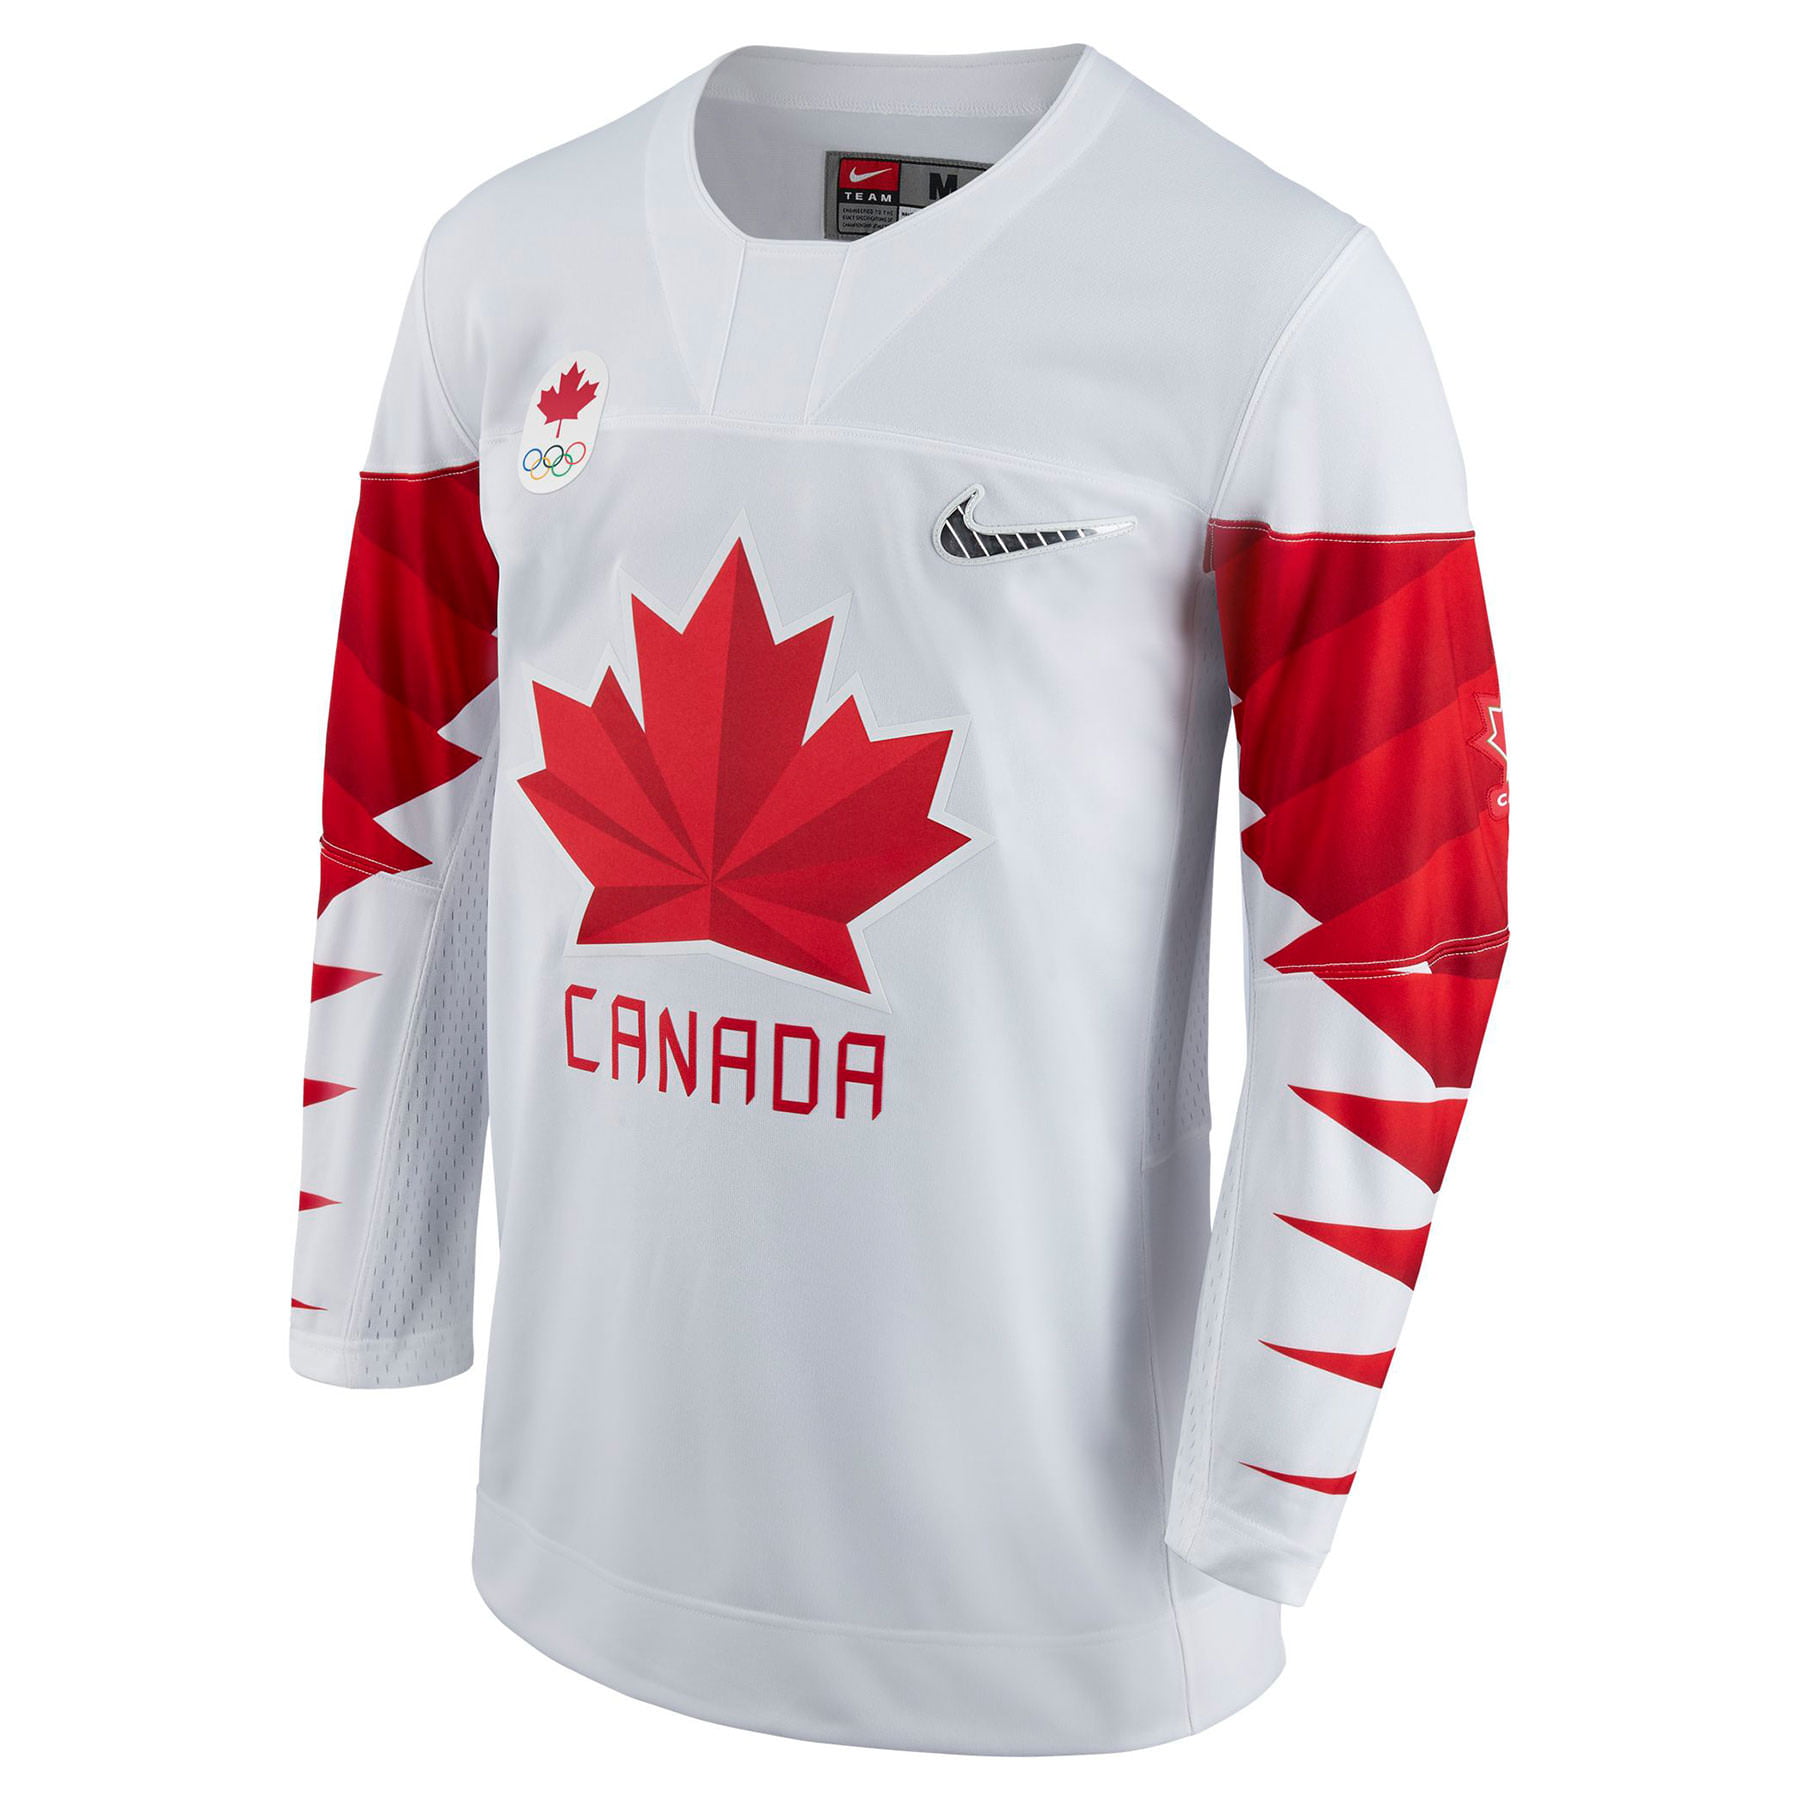 2018 team canada jersey